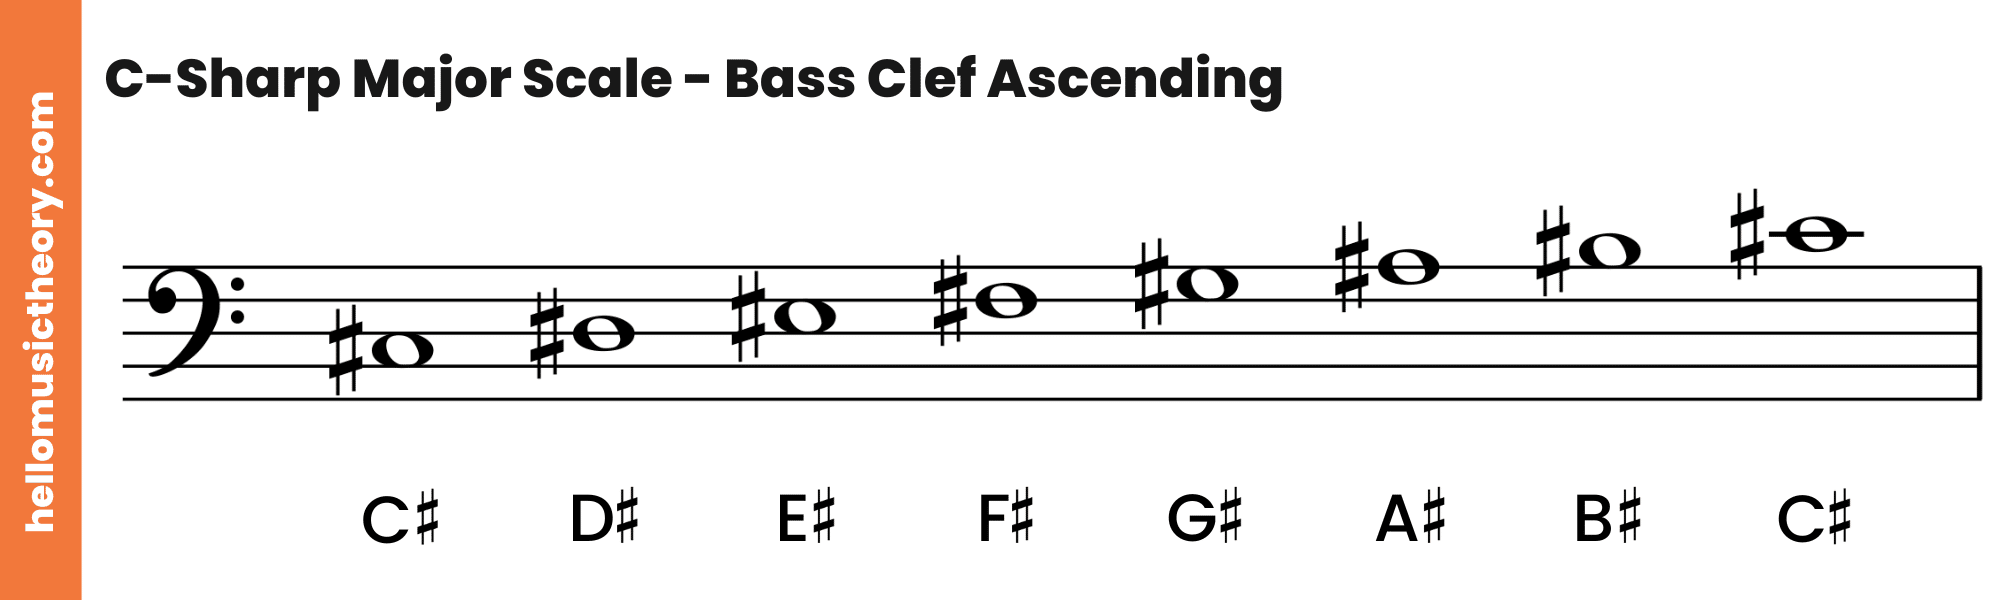 C-Sharp Major Scale Bass Clef Ascending